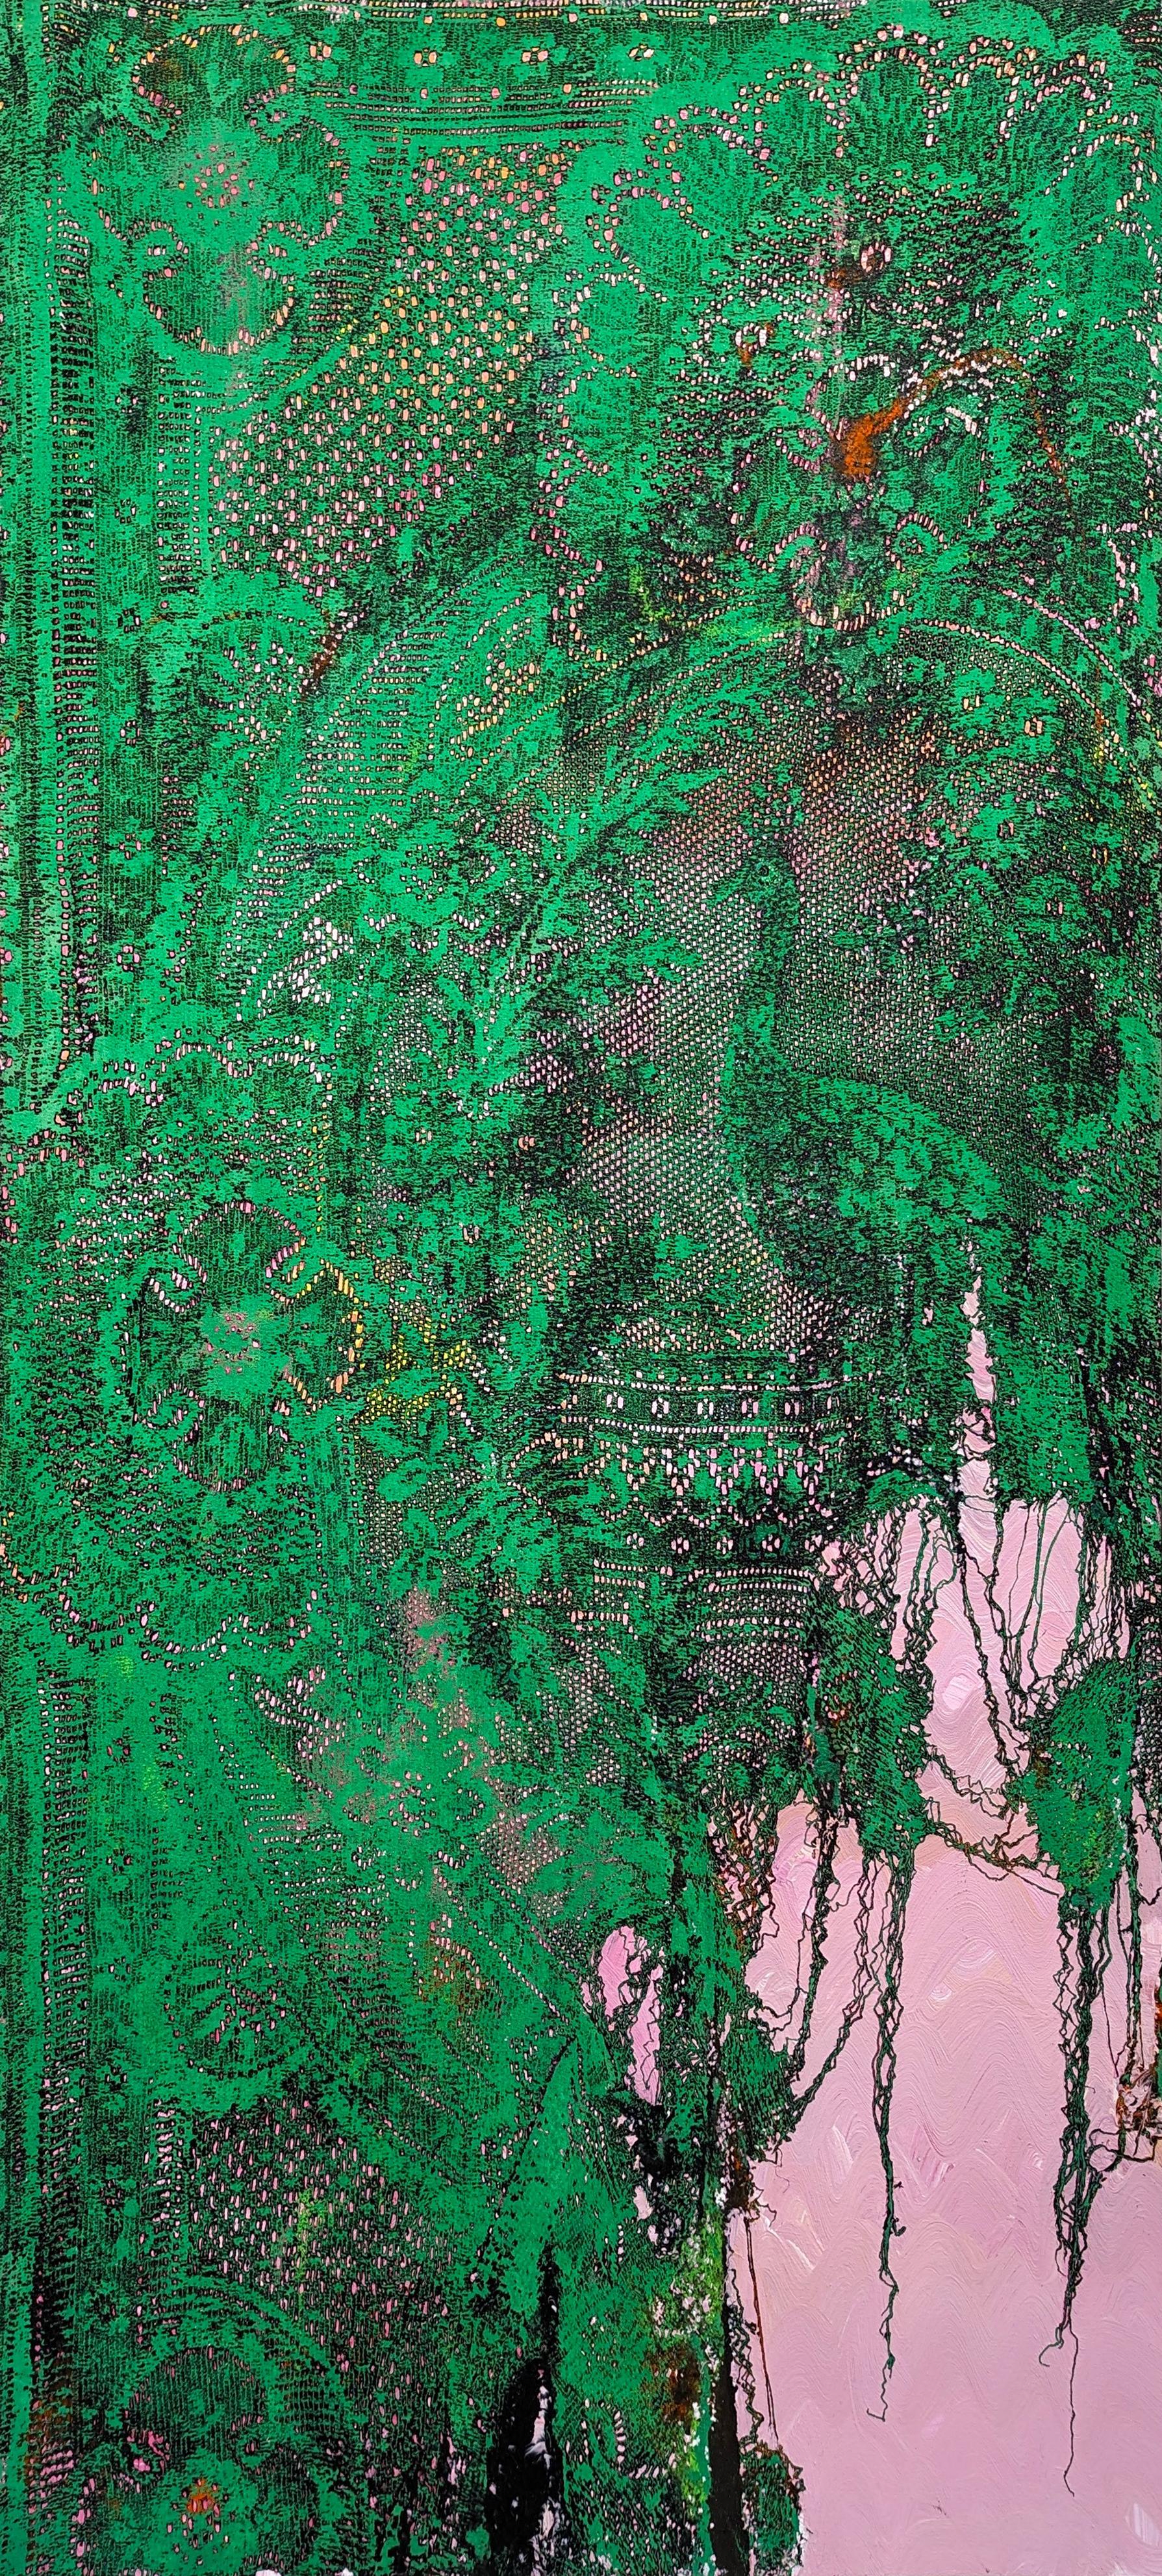 Abstract Painting Mark Flood - Peintures contemporaines en dentelle abstraite verte et rose, paon vert